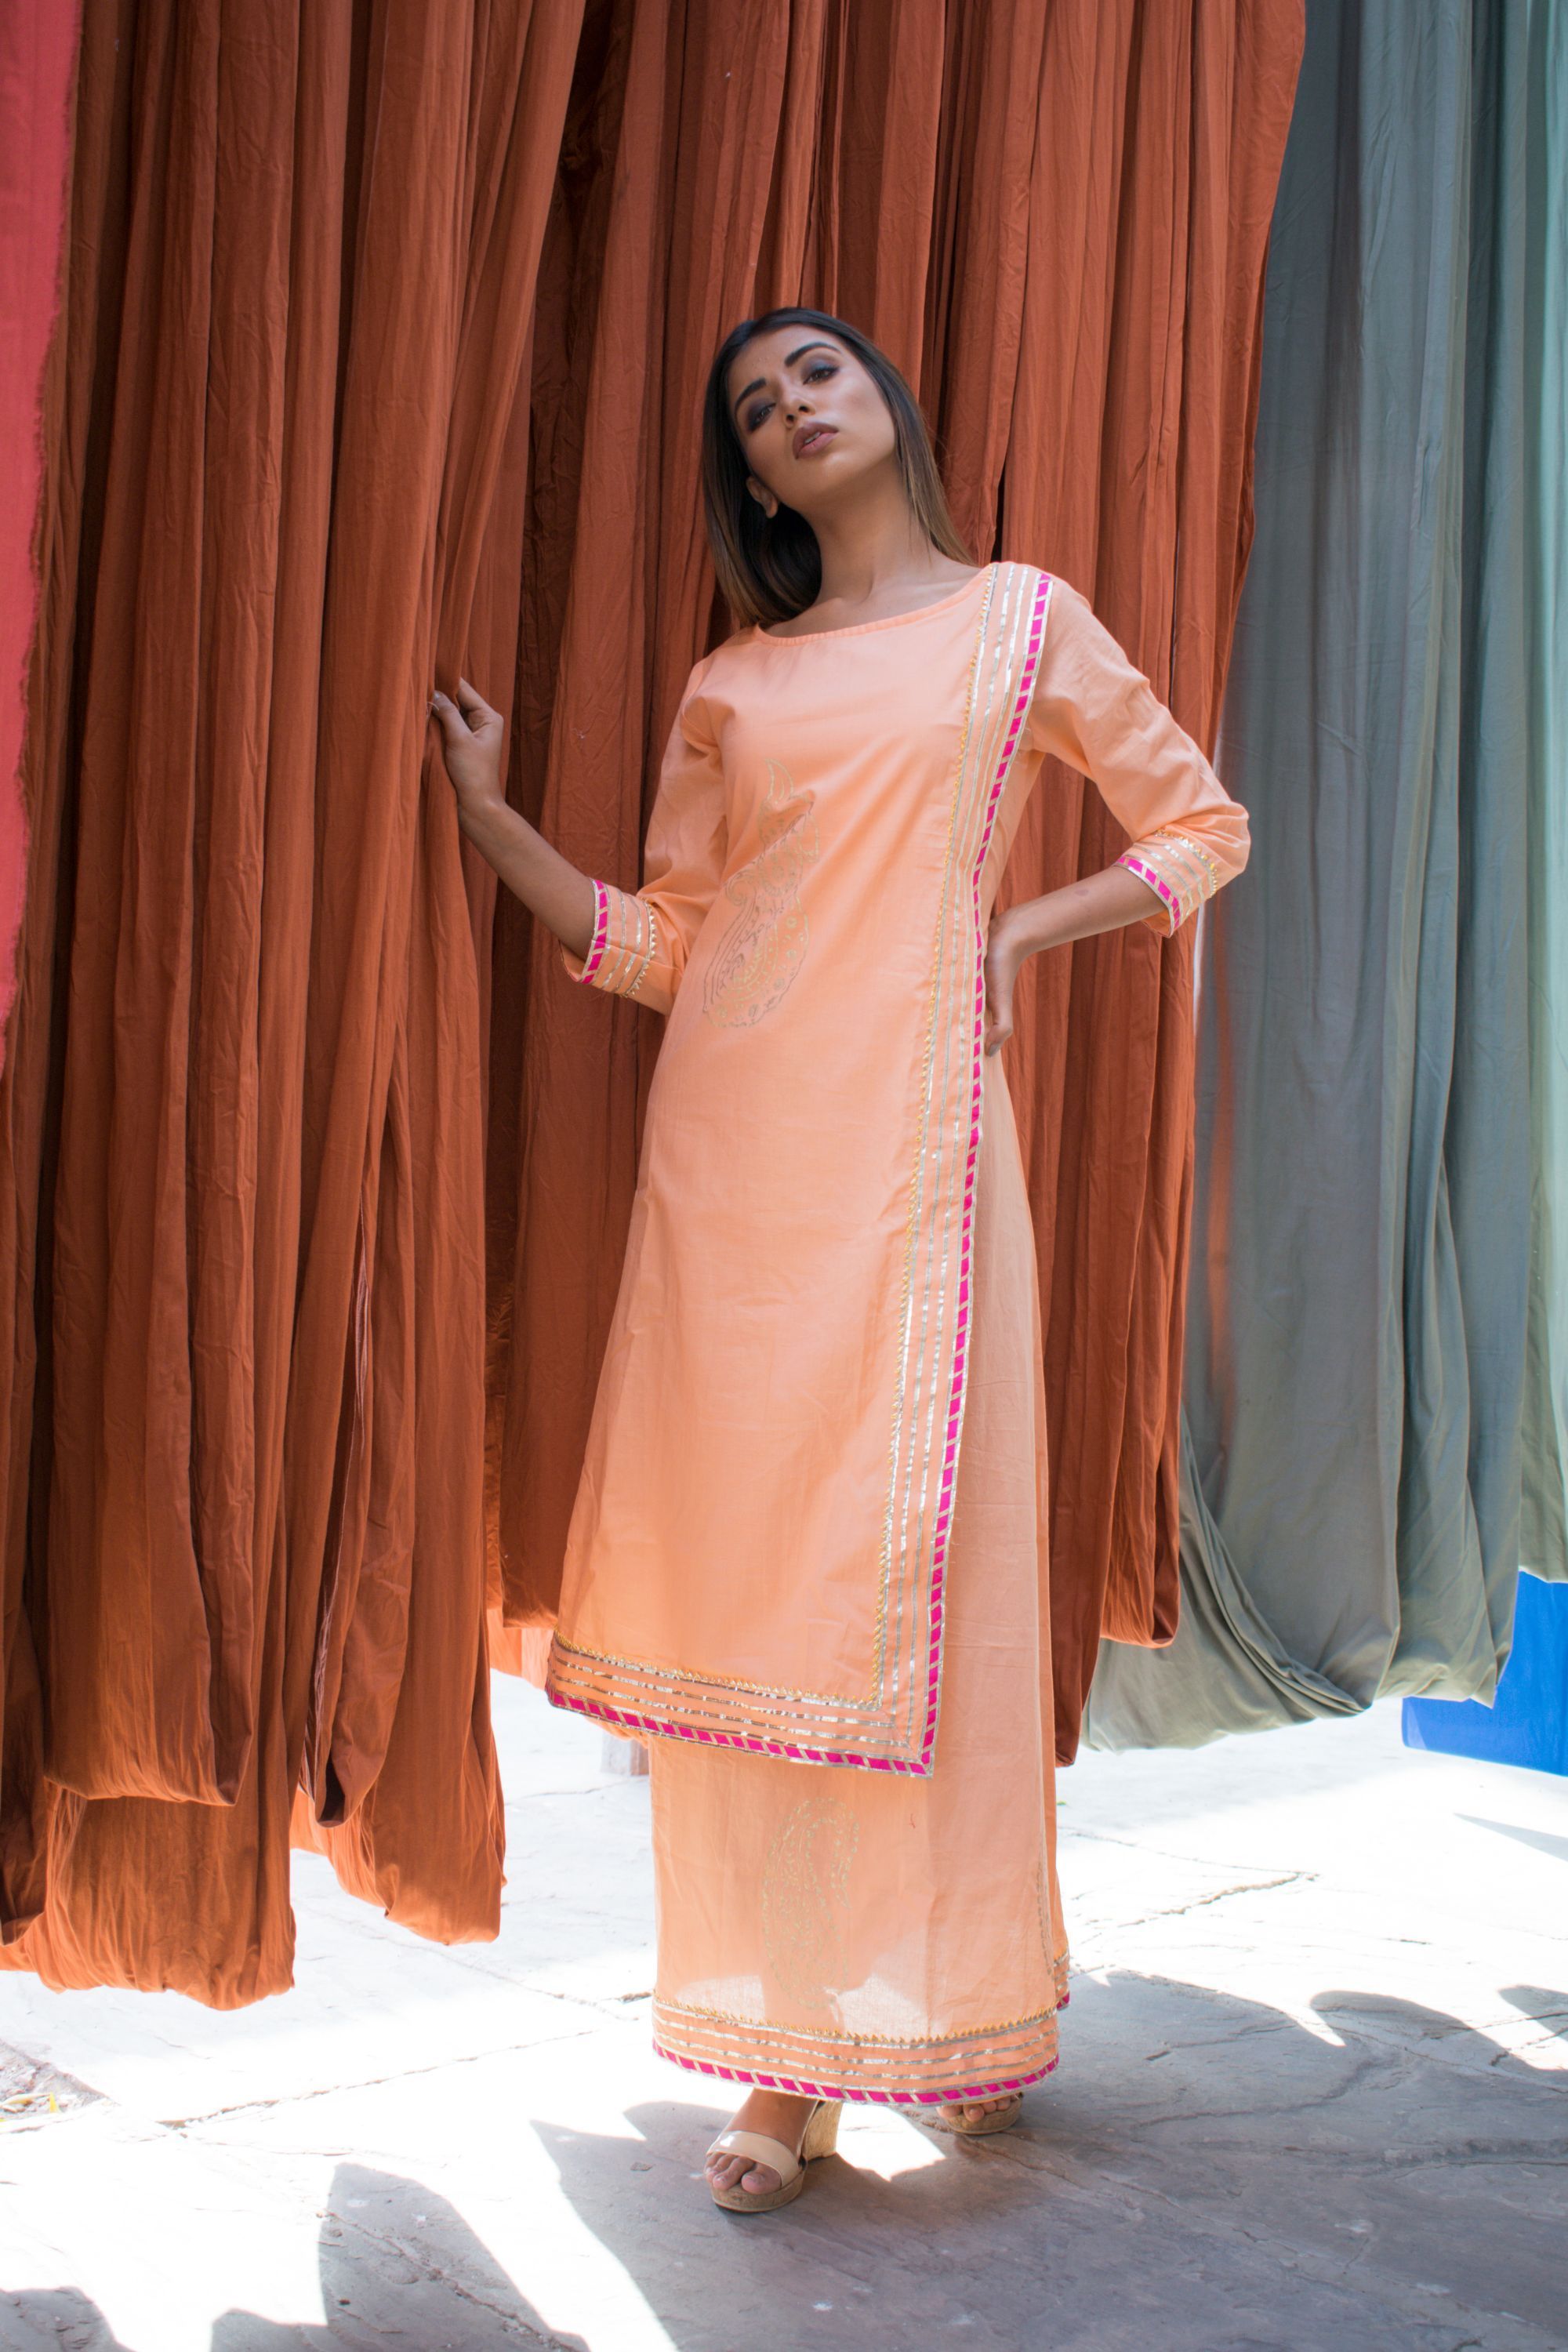 Women's Single-Piece Sandalwood Cotton Dress With Hand Block Printed Motifs. - Saras The Label